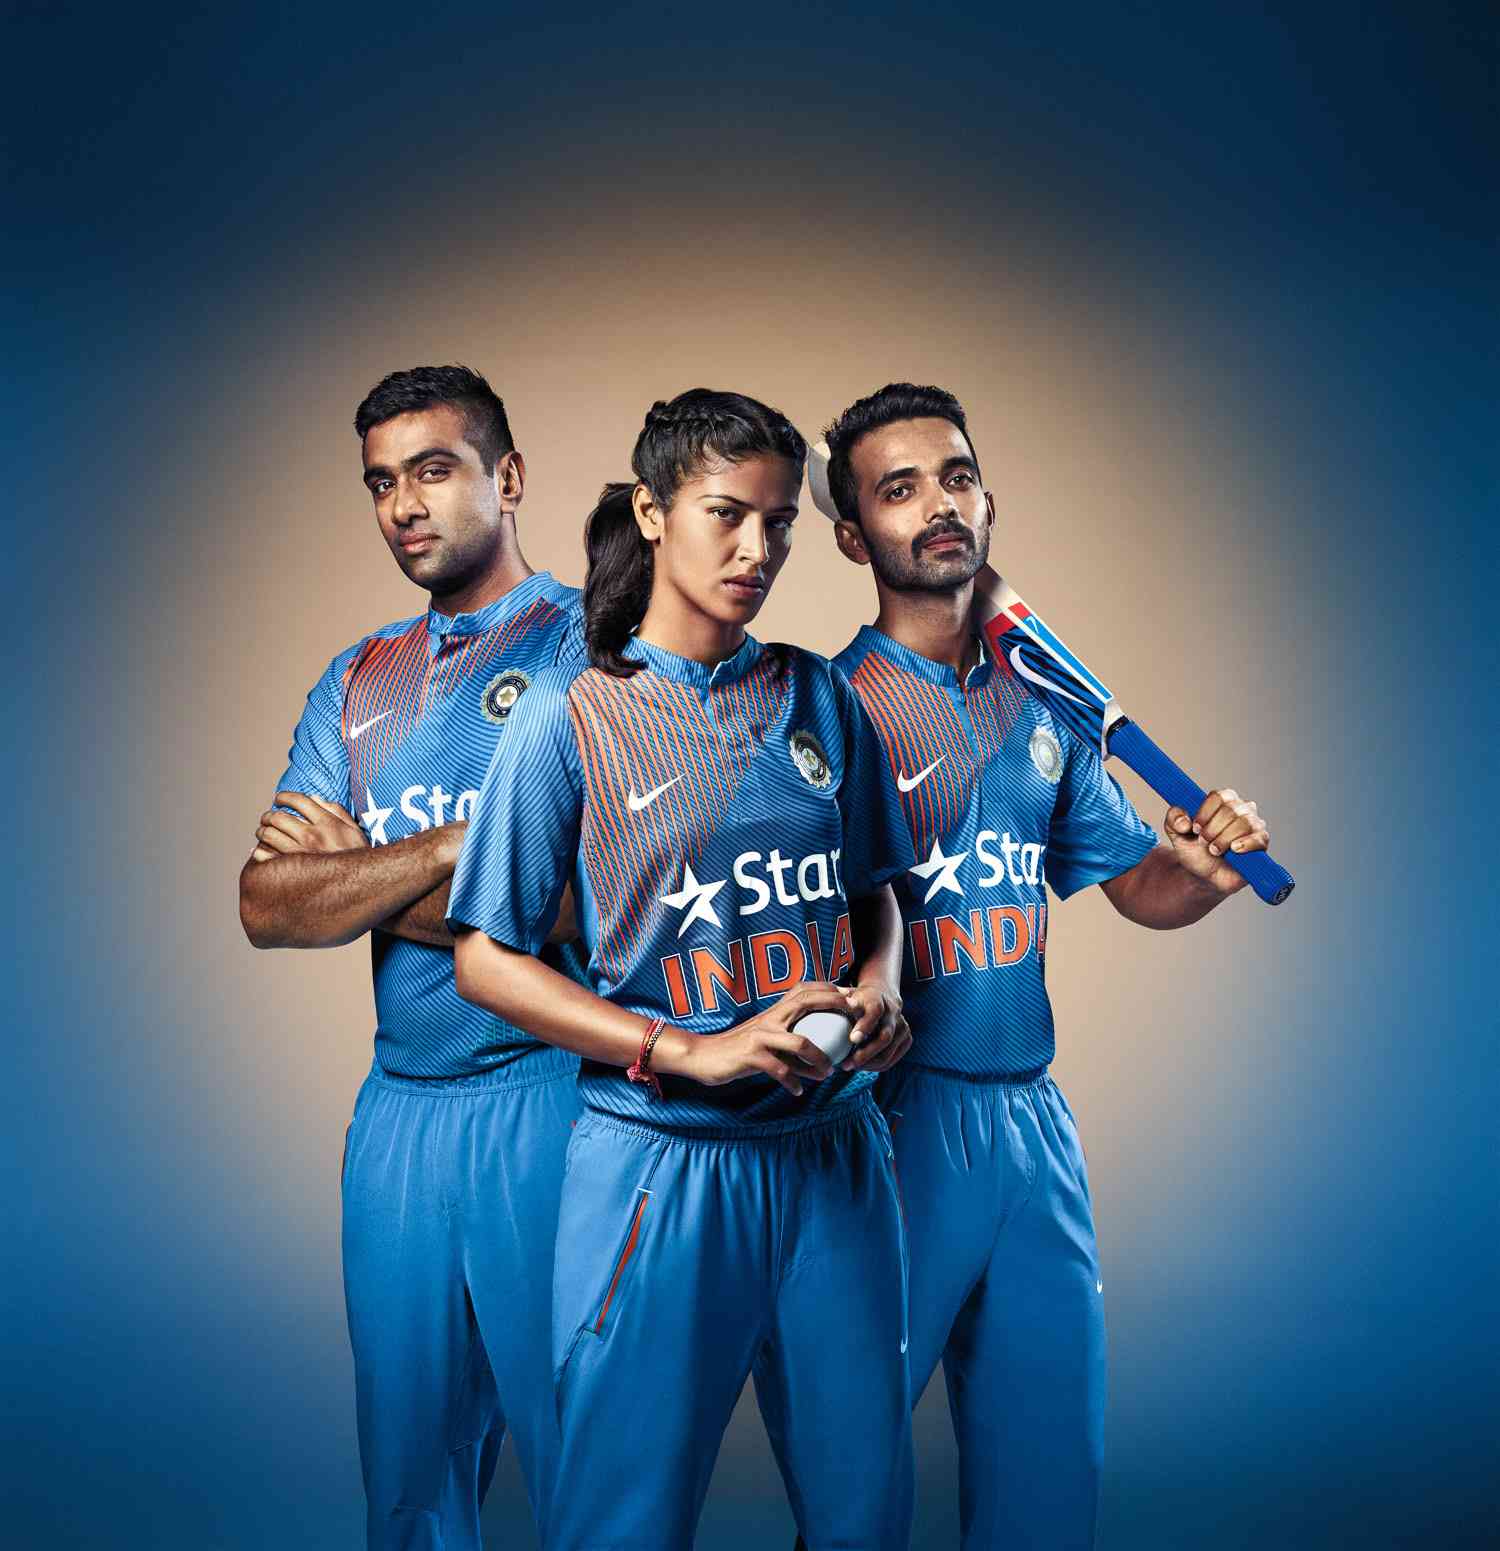 india national cricket team photos in the saint studio